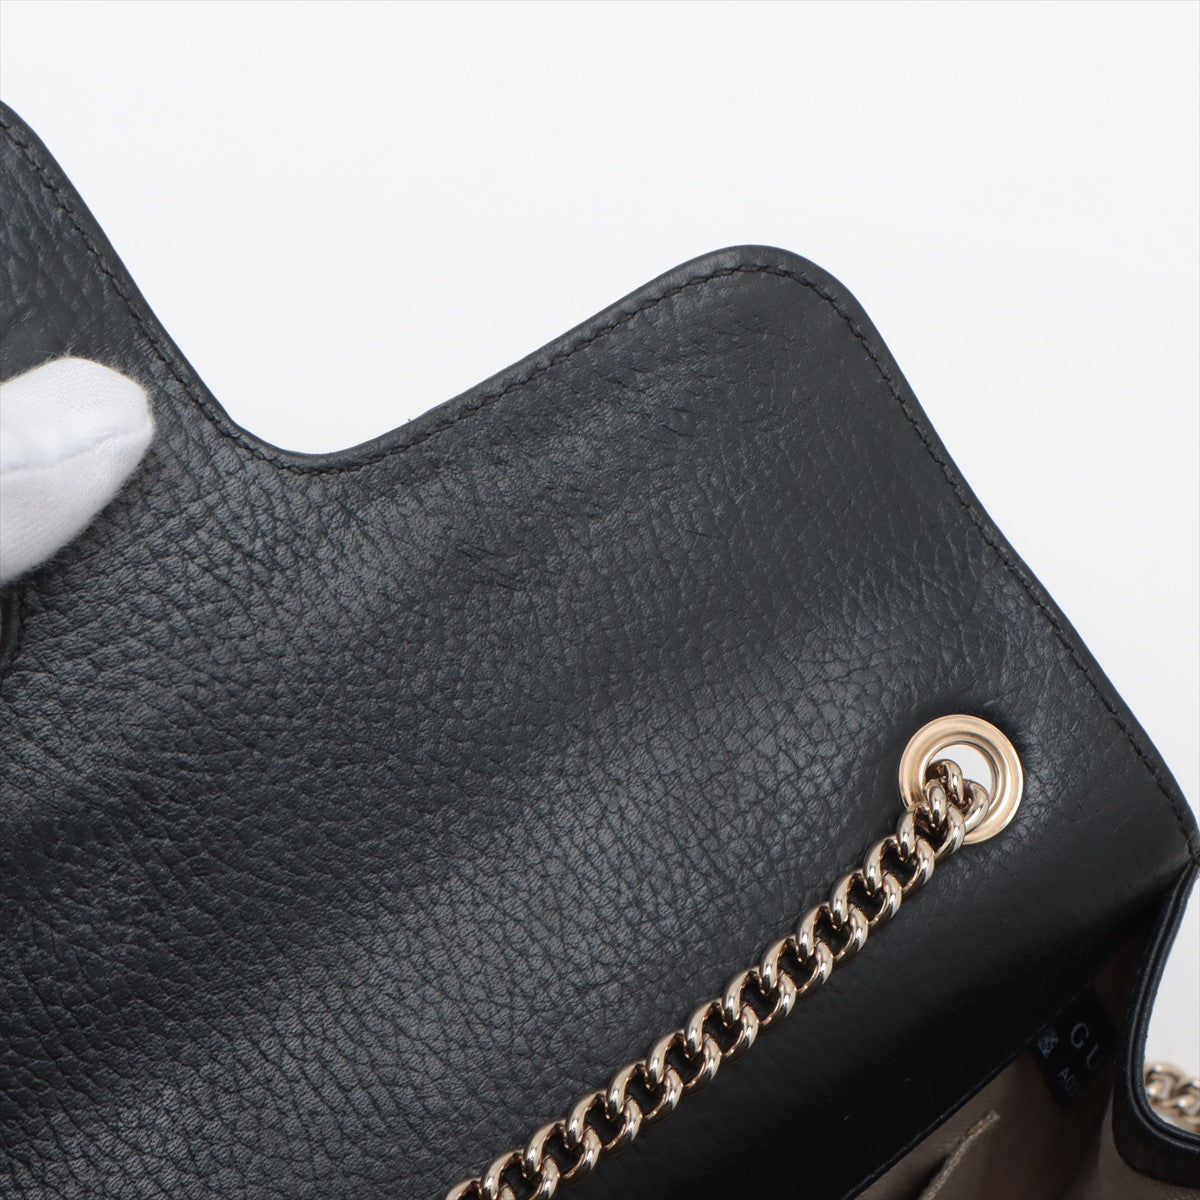 Gucci Interlocg G Leather Chain Shoulder Bag Black 510304